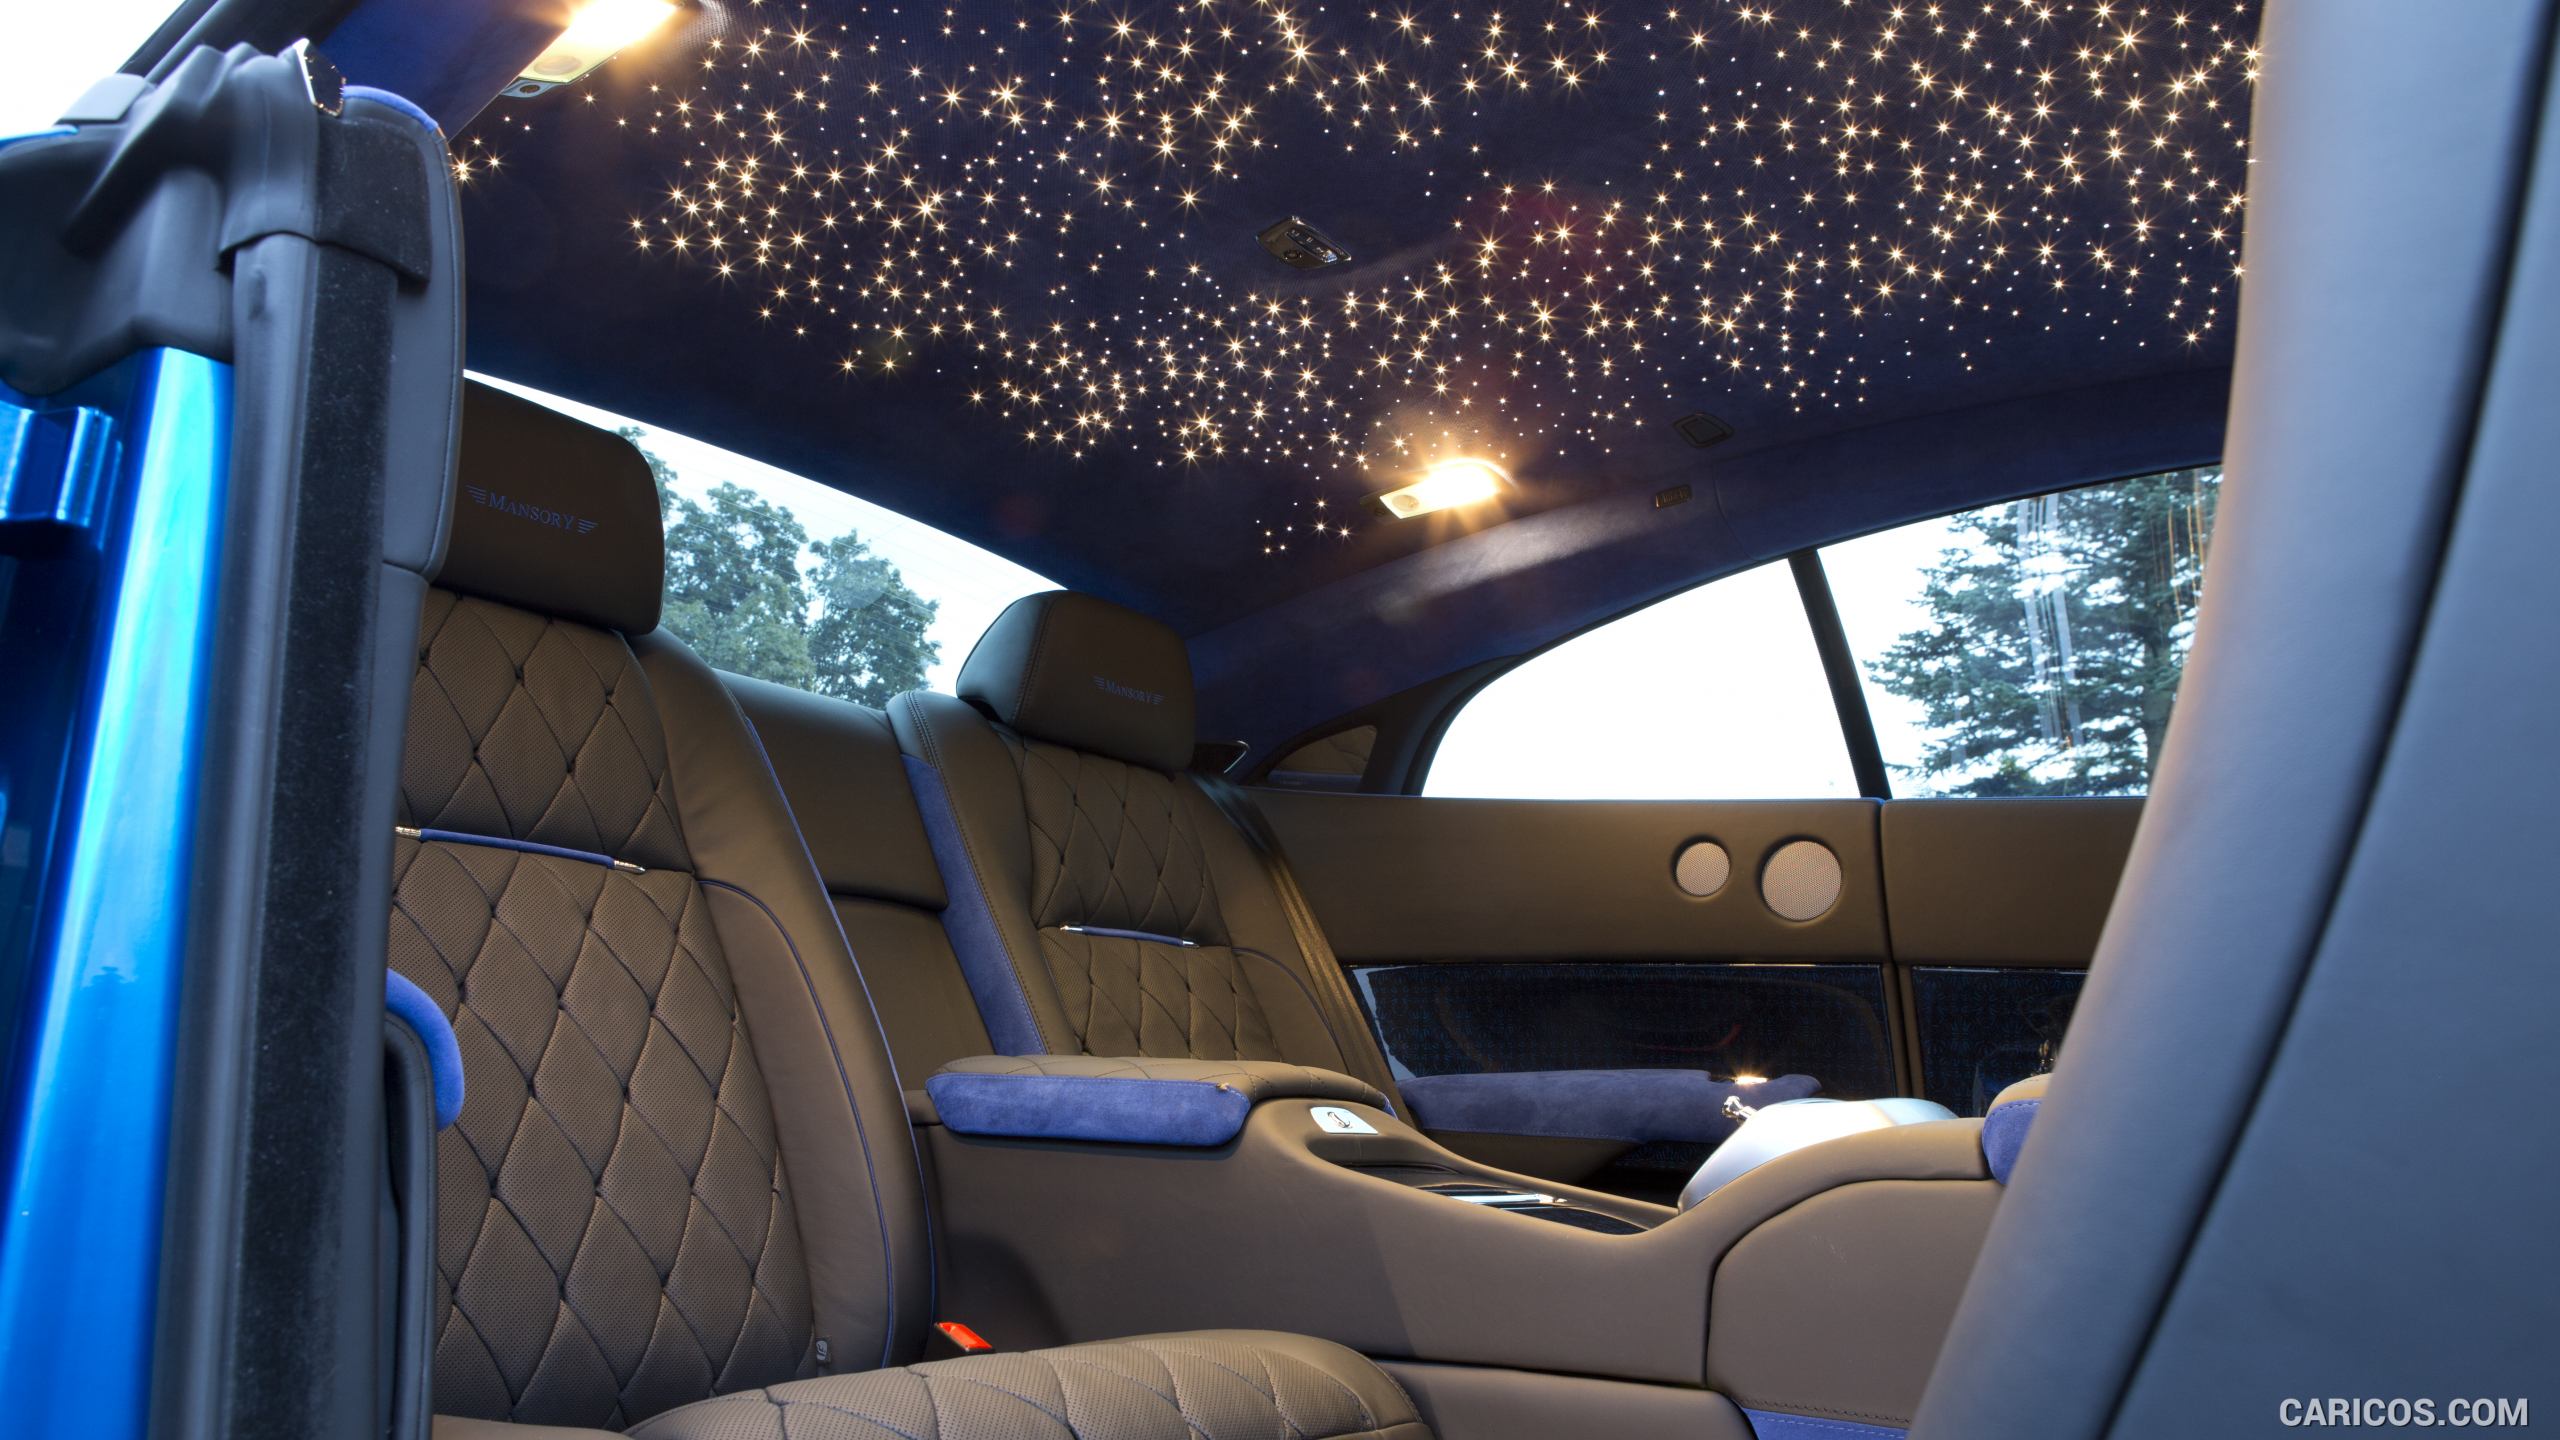 2015 MANSORY BLEURION based on Rolls-Royce Wraith - Interior, #11 of 12